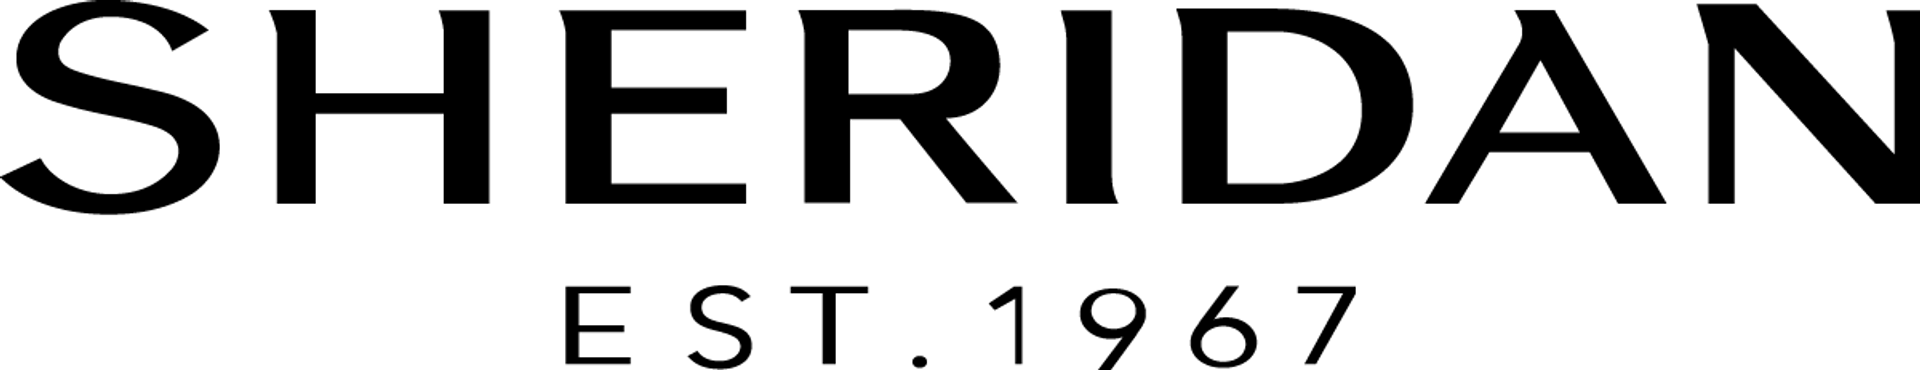 SHERIDAN logo of current catalogue